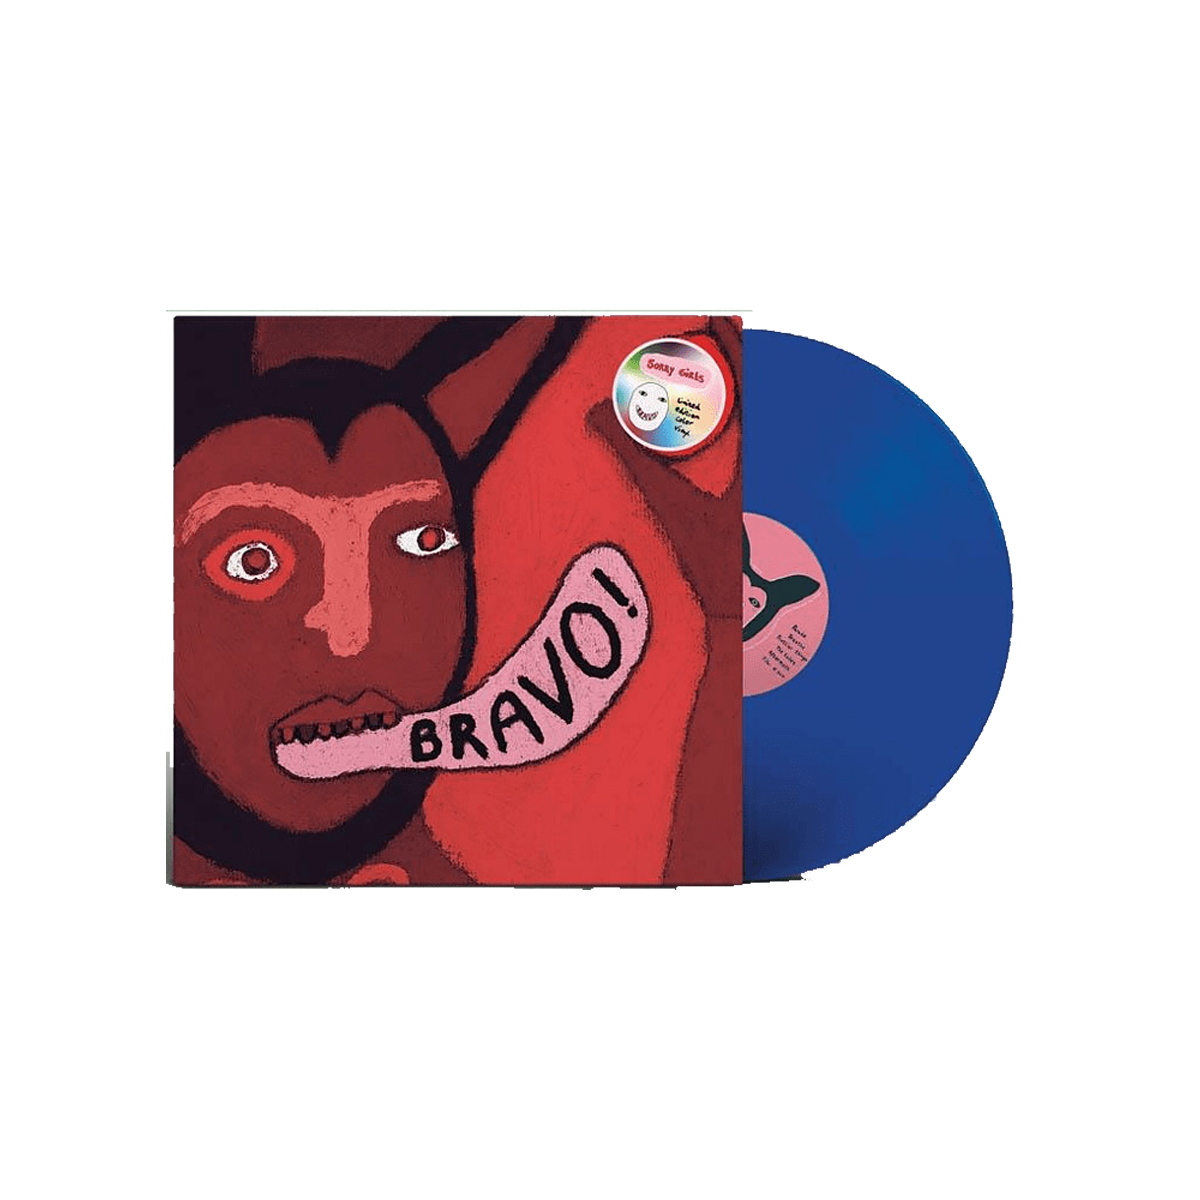 Sorry Girls - Bravo! Limited Edition Blue Vinyl LP